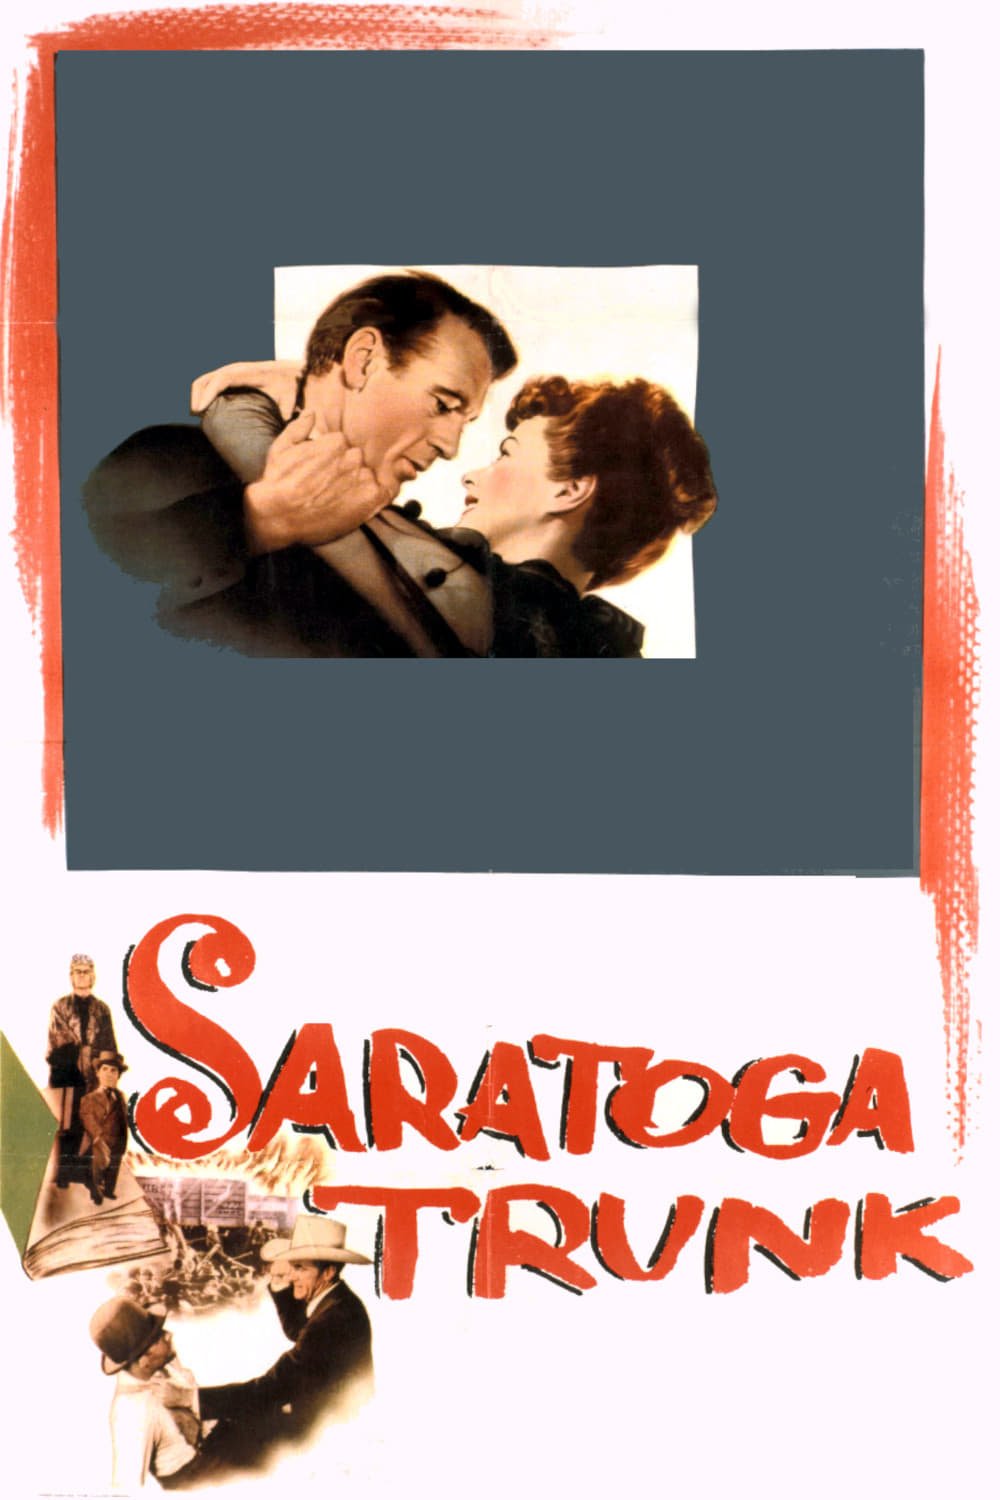 Saratoga Trunk